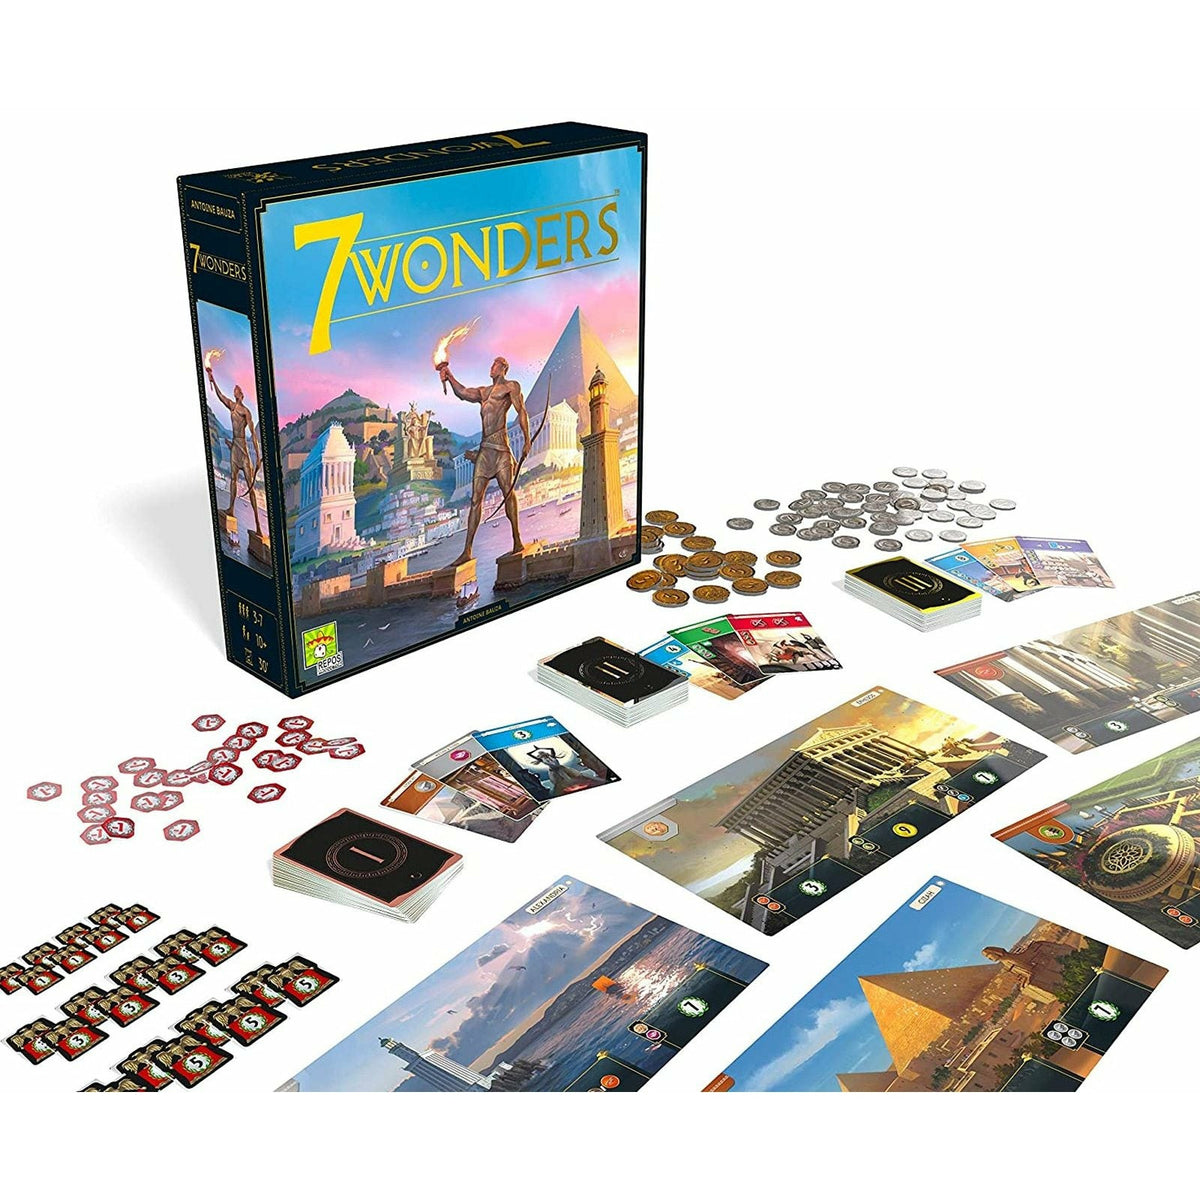 7 Wonders - New Edition – Vault Games